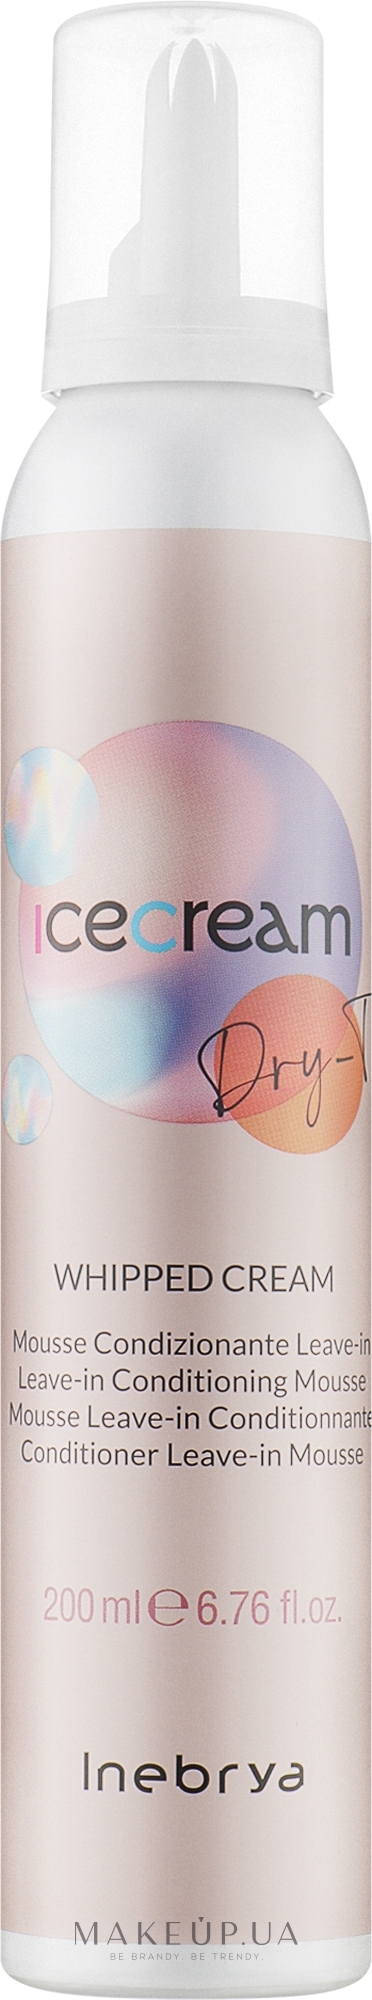 Несмываемый мусс-кондиционер для волос - Inebrya Ice Cream Dry-T Whipped Cream — фото 200ml